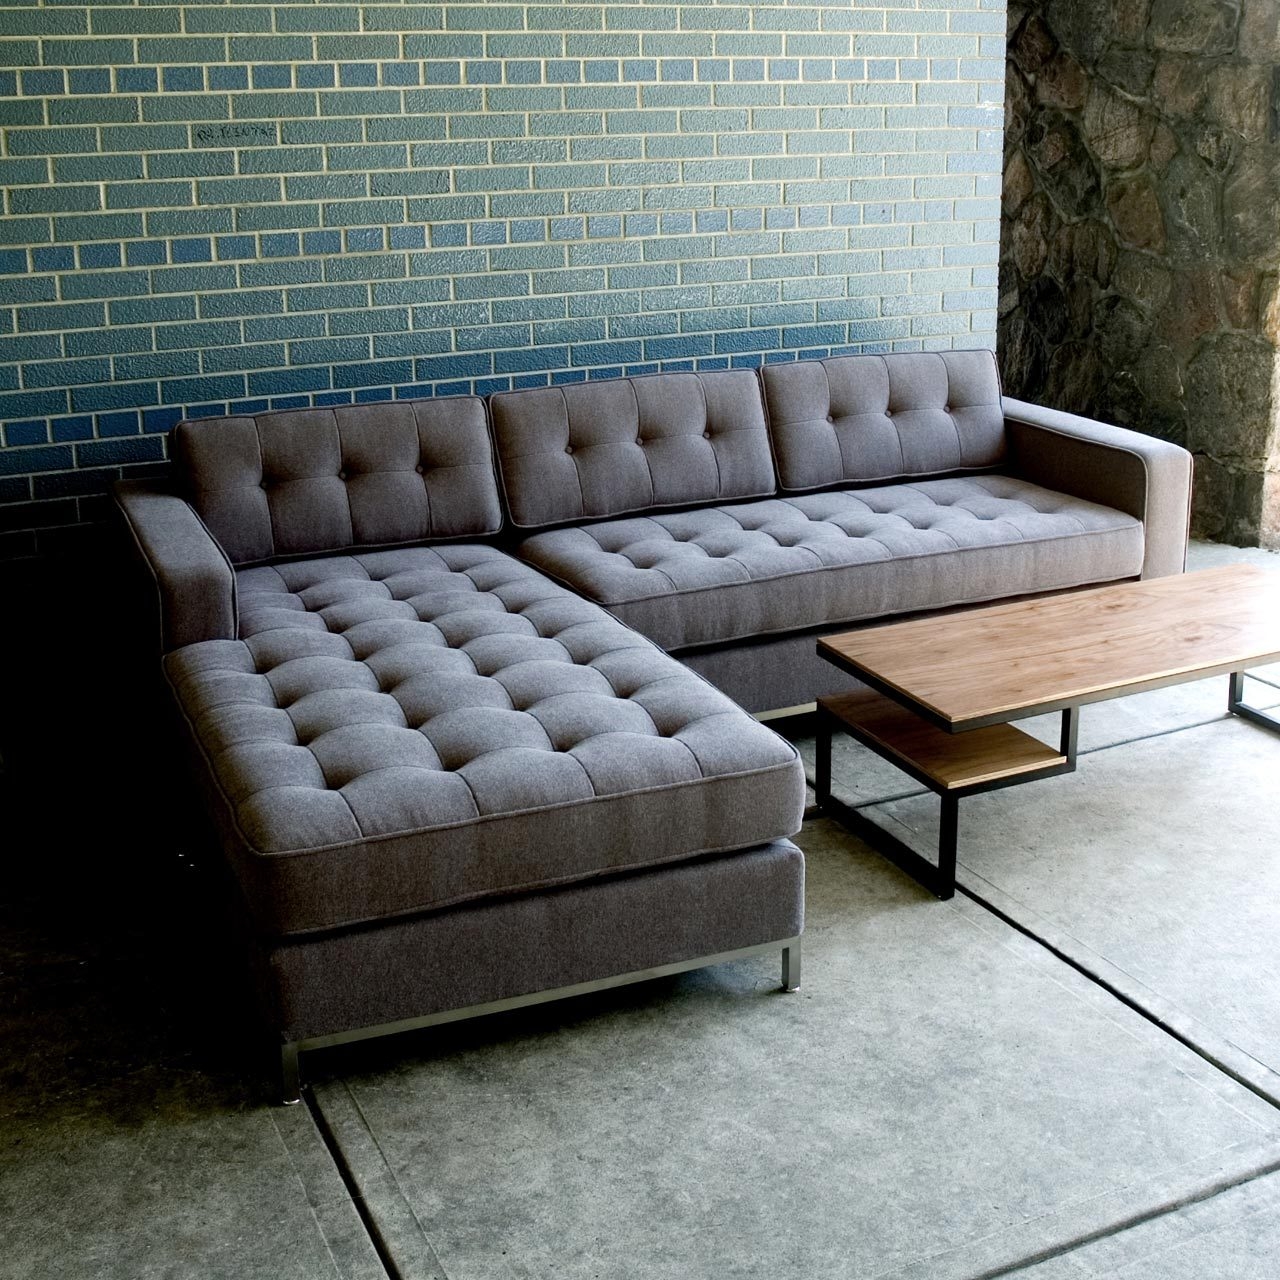 Charcoal gray sectional sofa